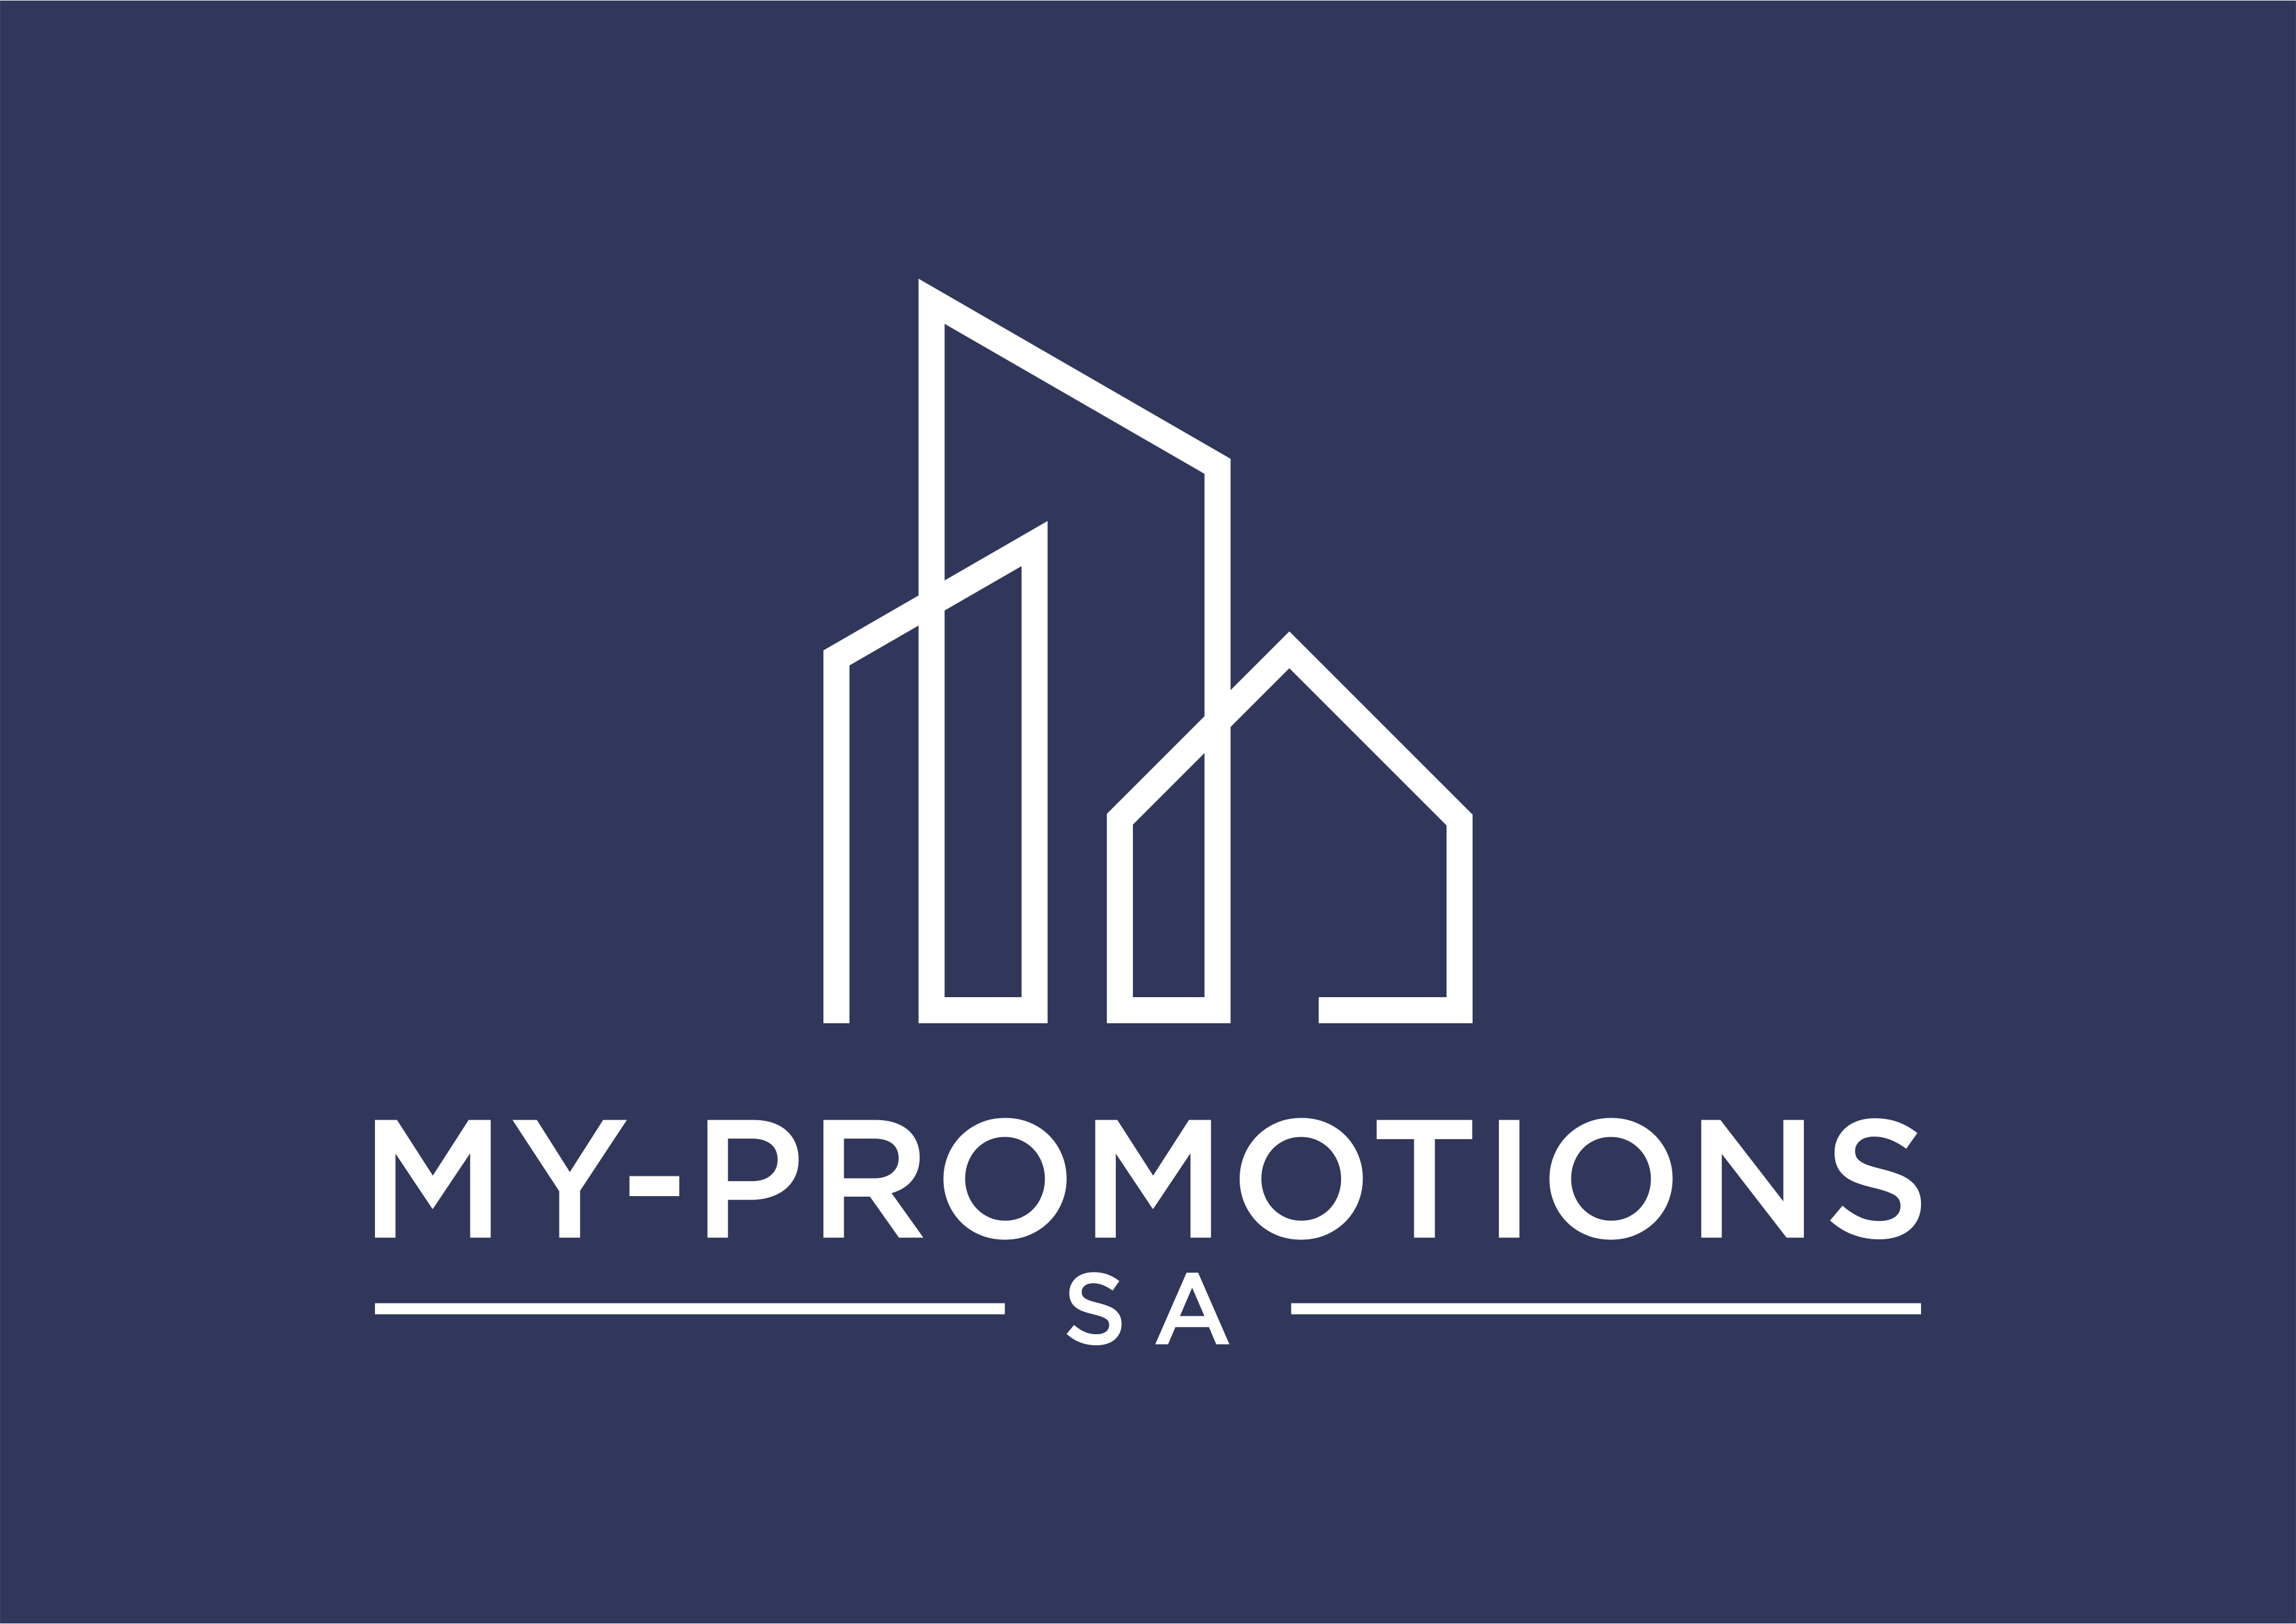 My-Promotions SA